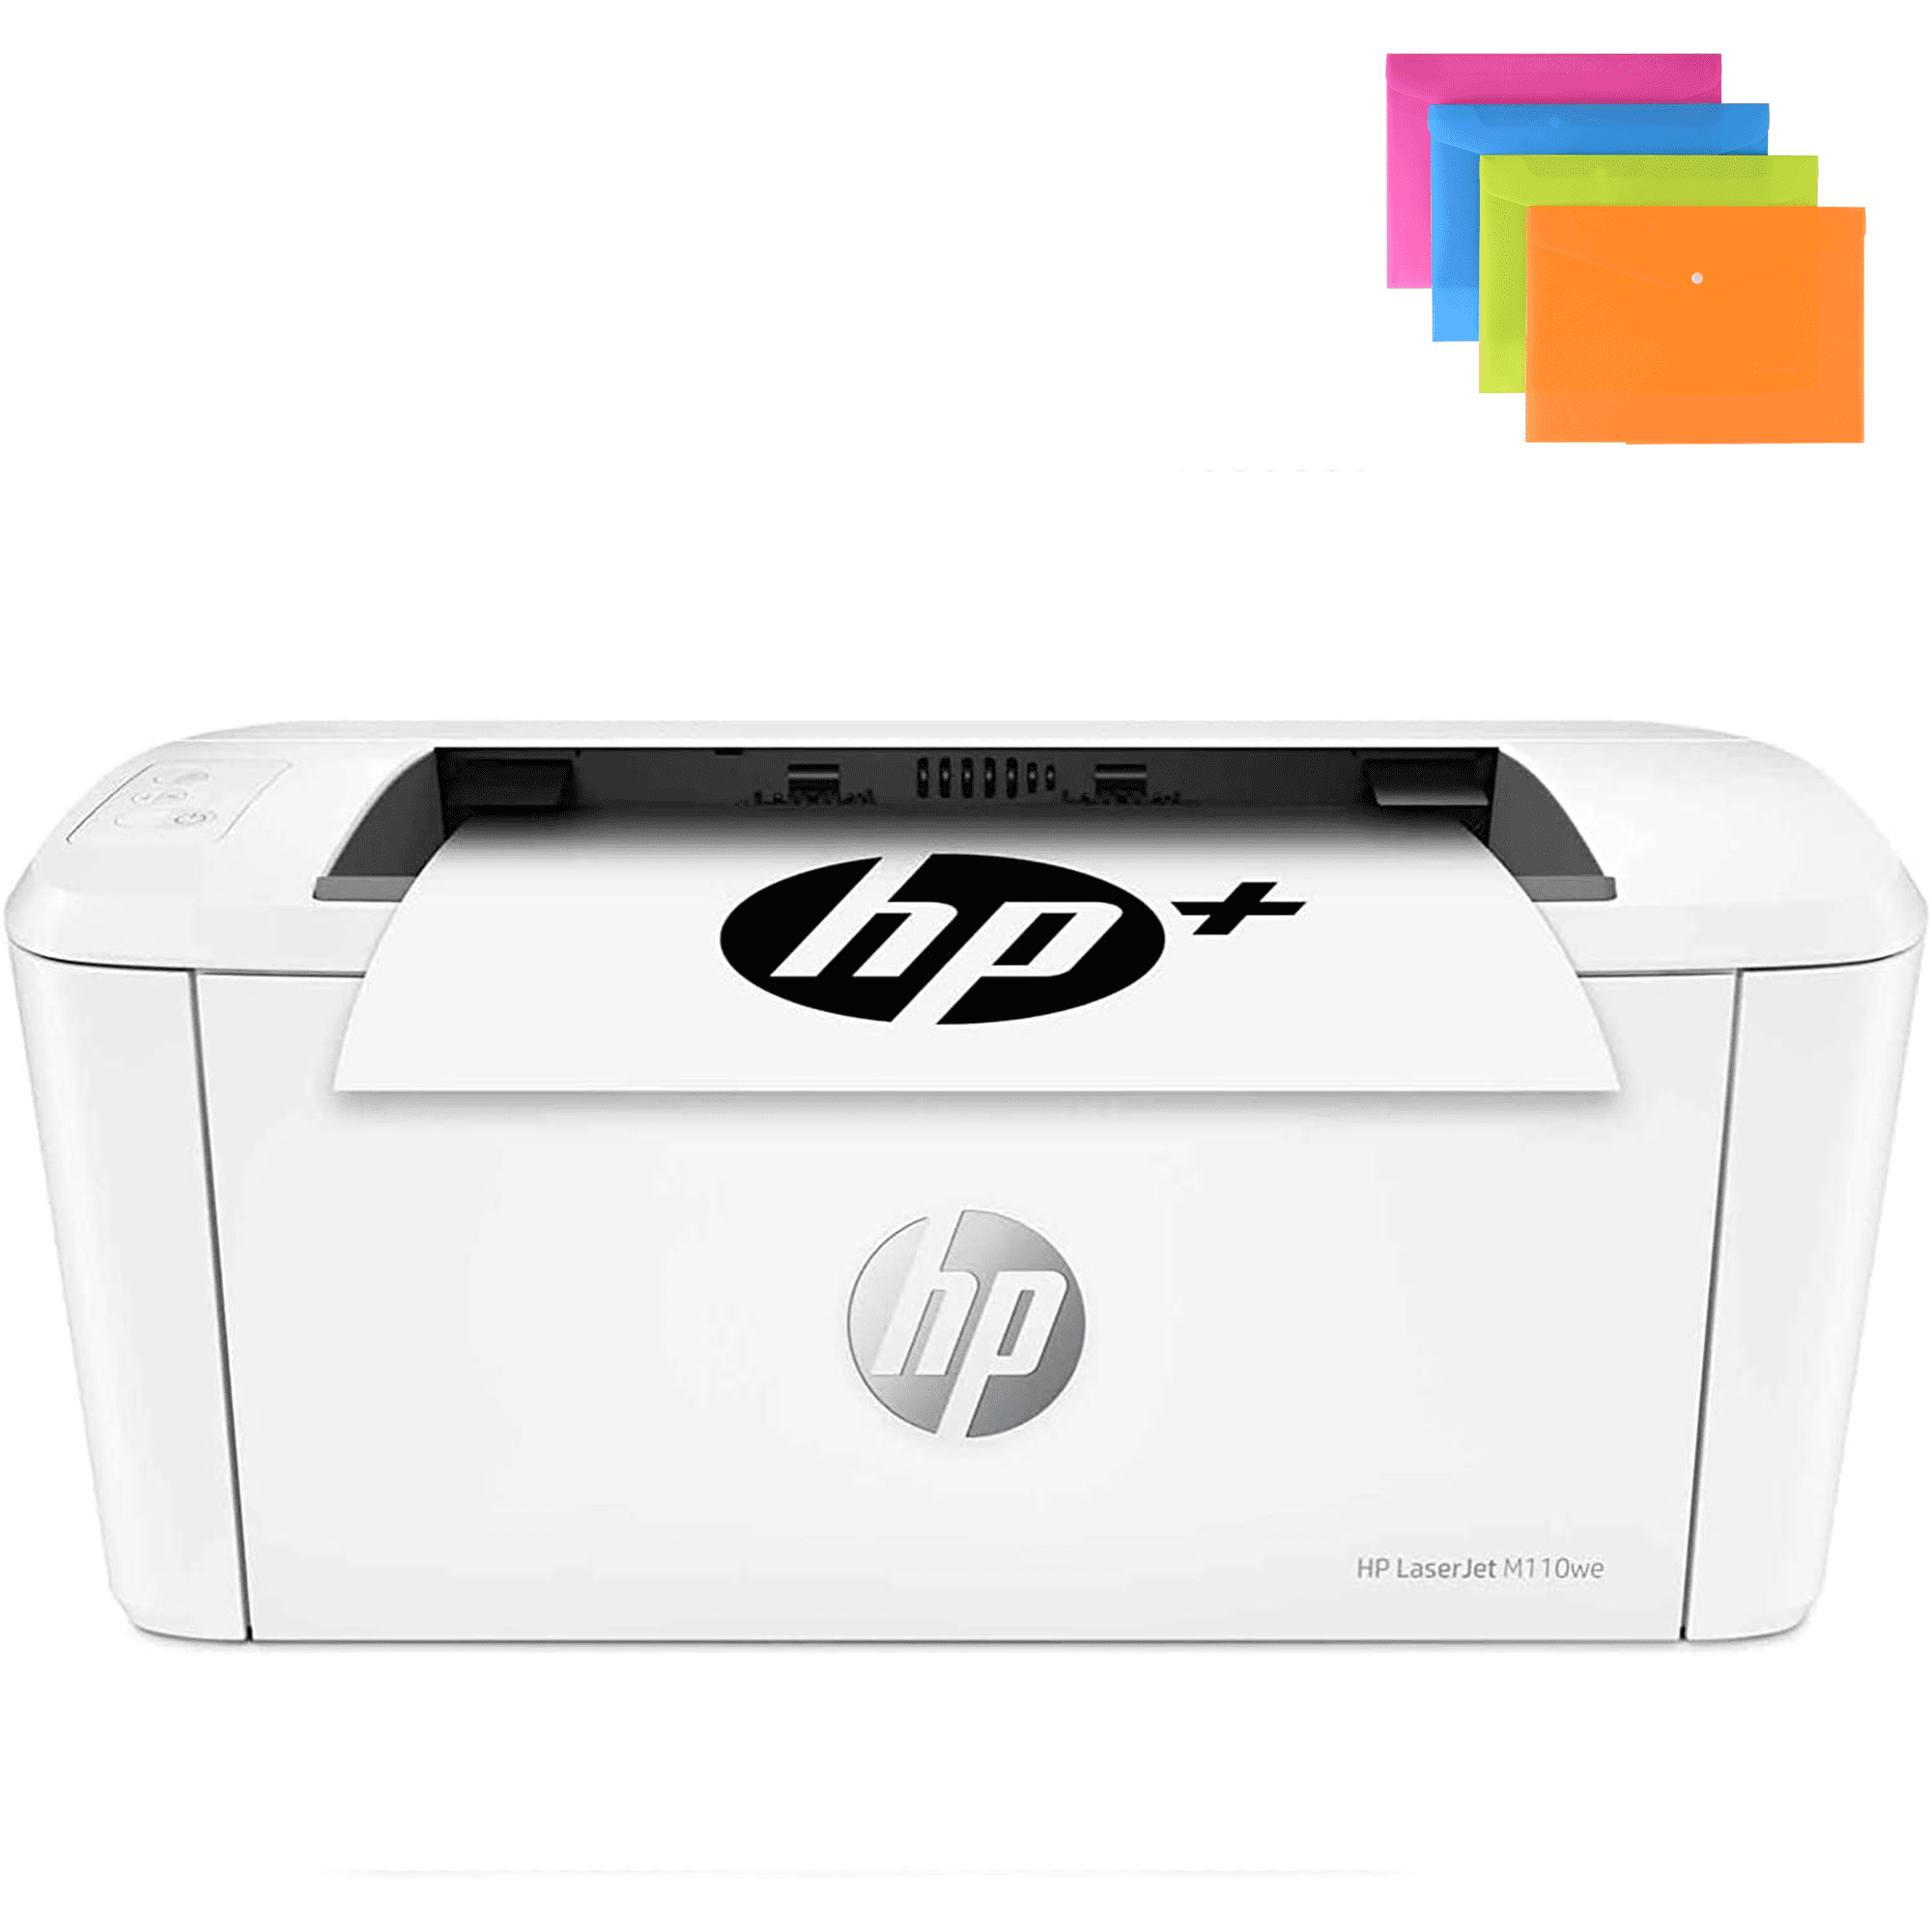 x HP+, Laser dpi, Monochrome 600 600 with Laserjet Wi-Fi, USB, 21 x ppm, 8.5 H-P Printer Wireless 14, Technology, Auto-On/Auto-Off Folders M110we File Print,